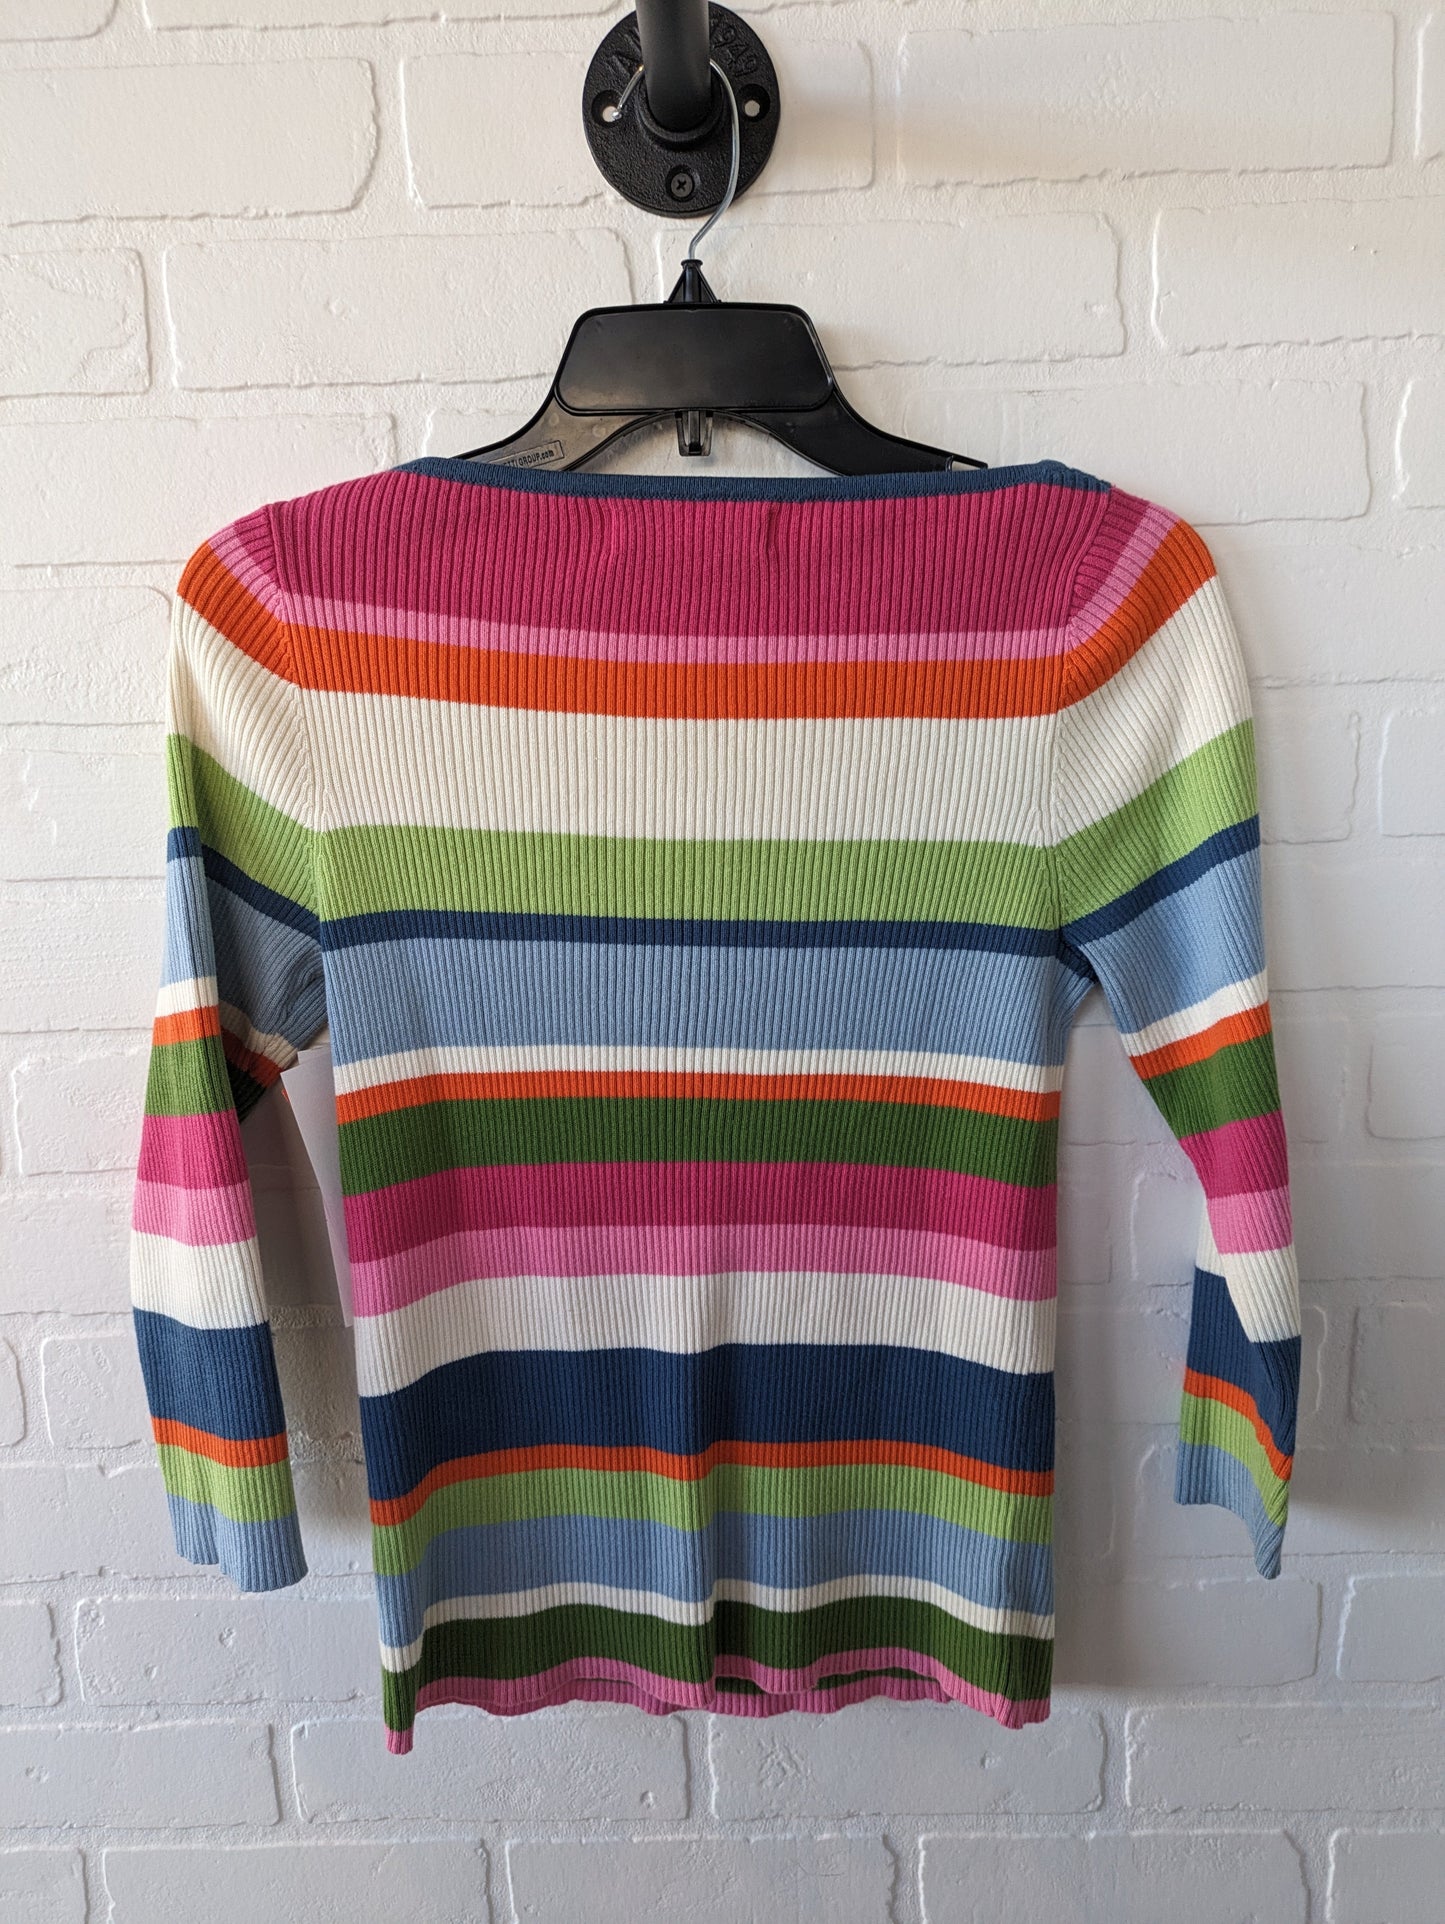 Sweater By Jones New York  Size: Petite